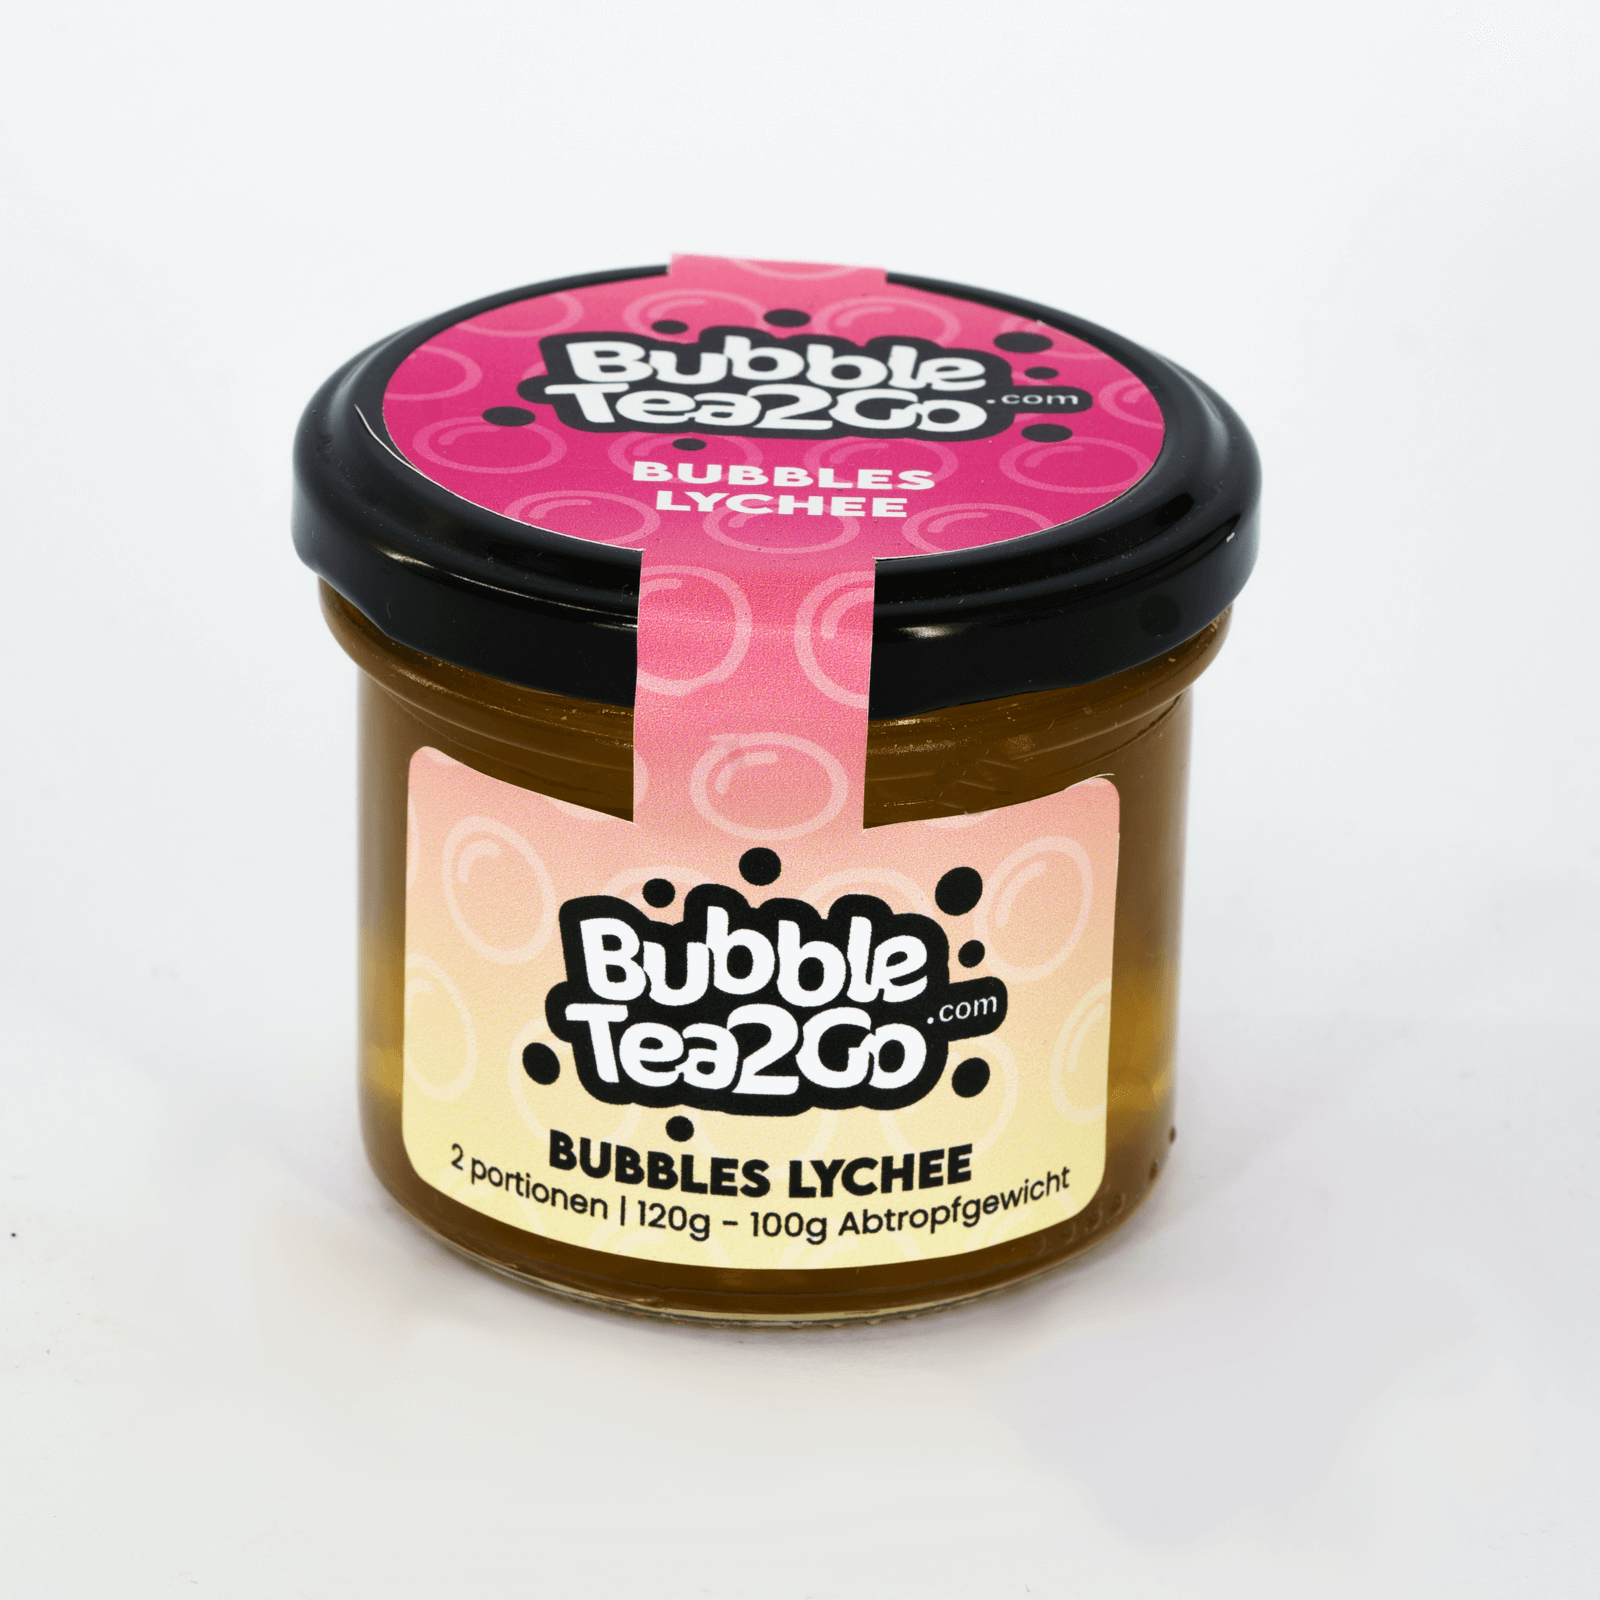 Bubbles - Lychee 2 Portionen